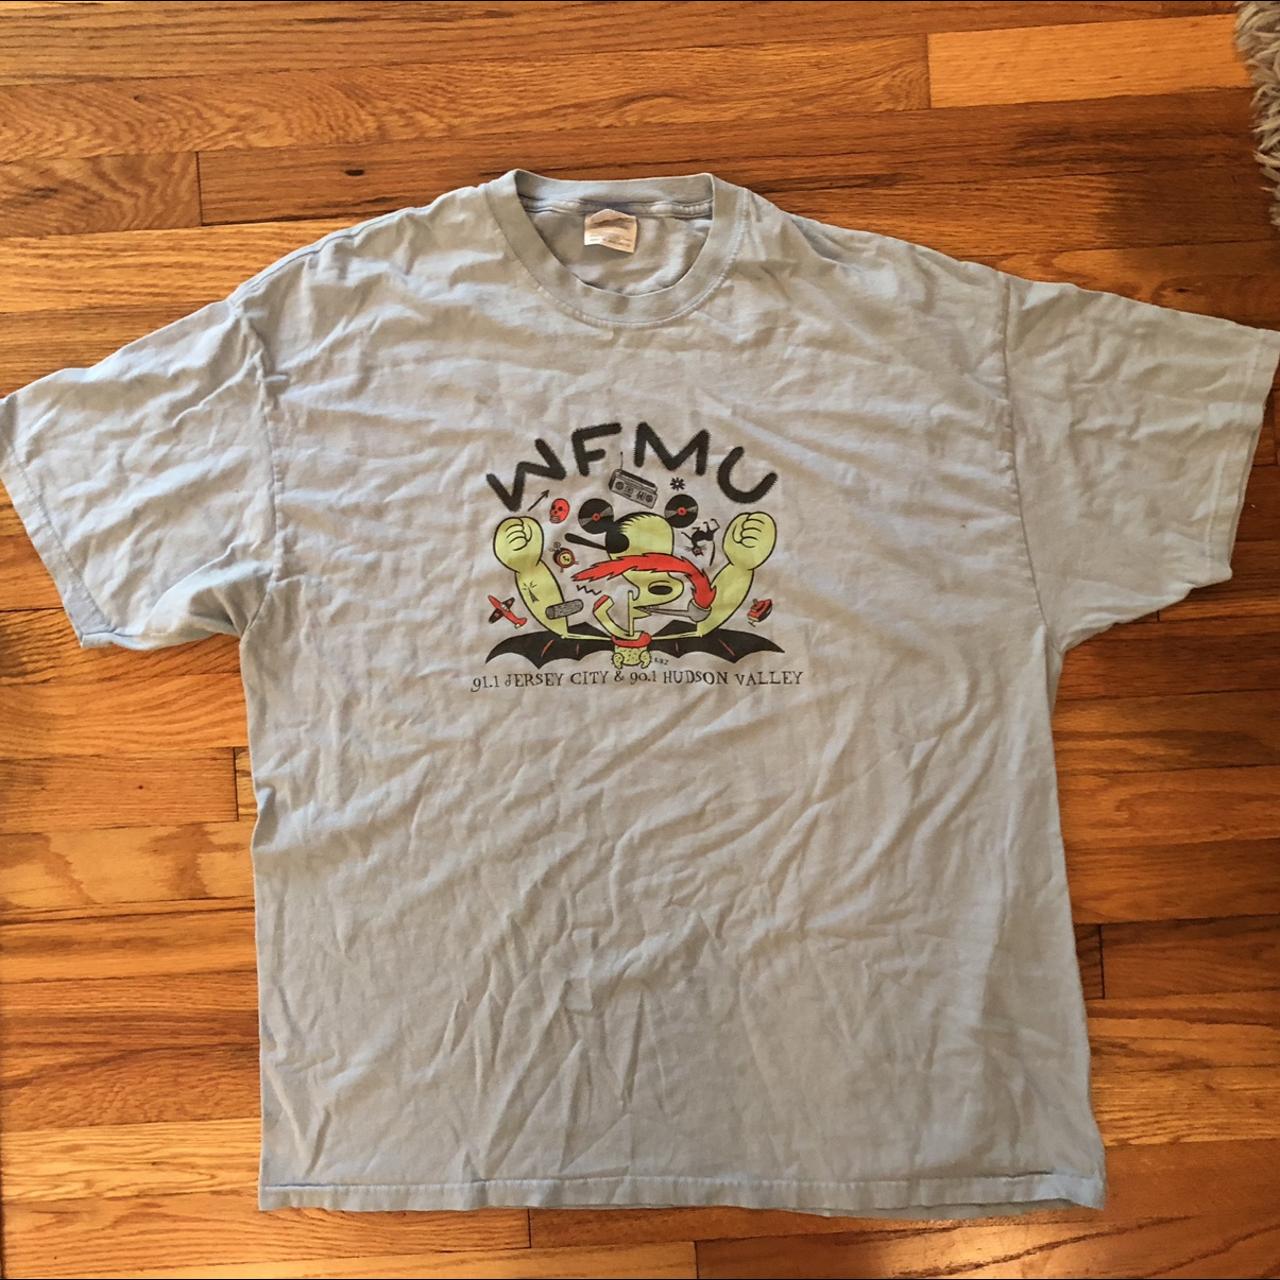 WFMU Stereo T Shirt 91.9 New York Jersey City Historic 